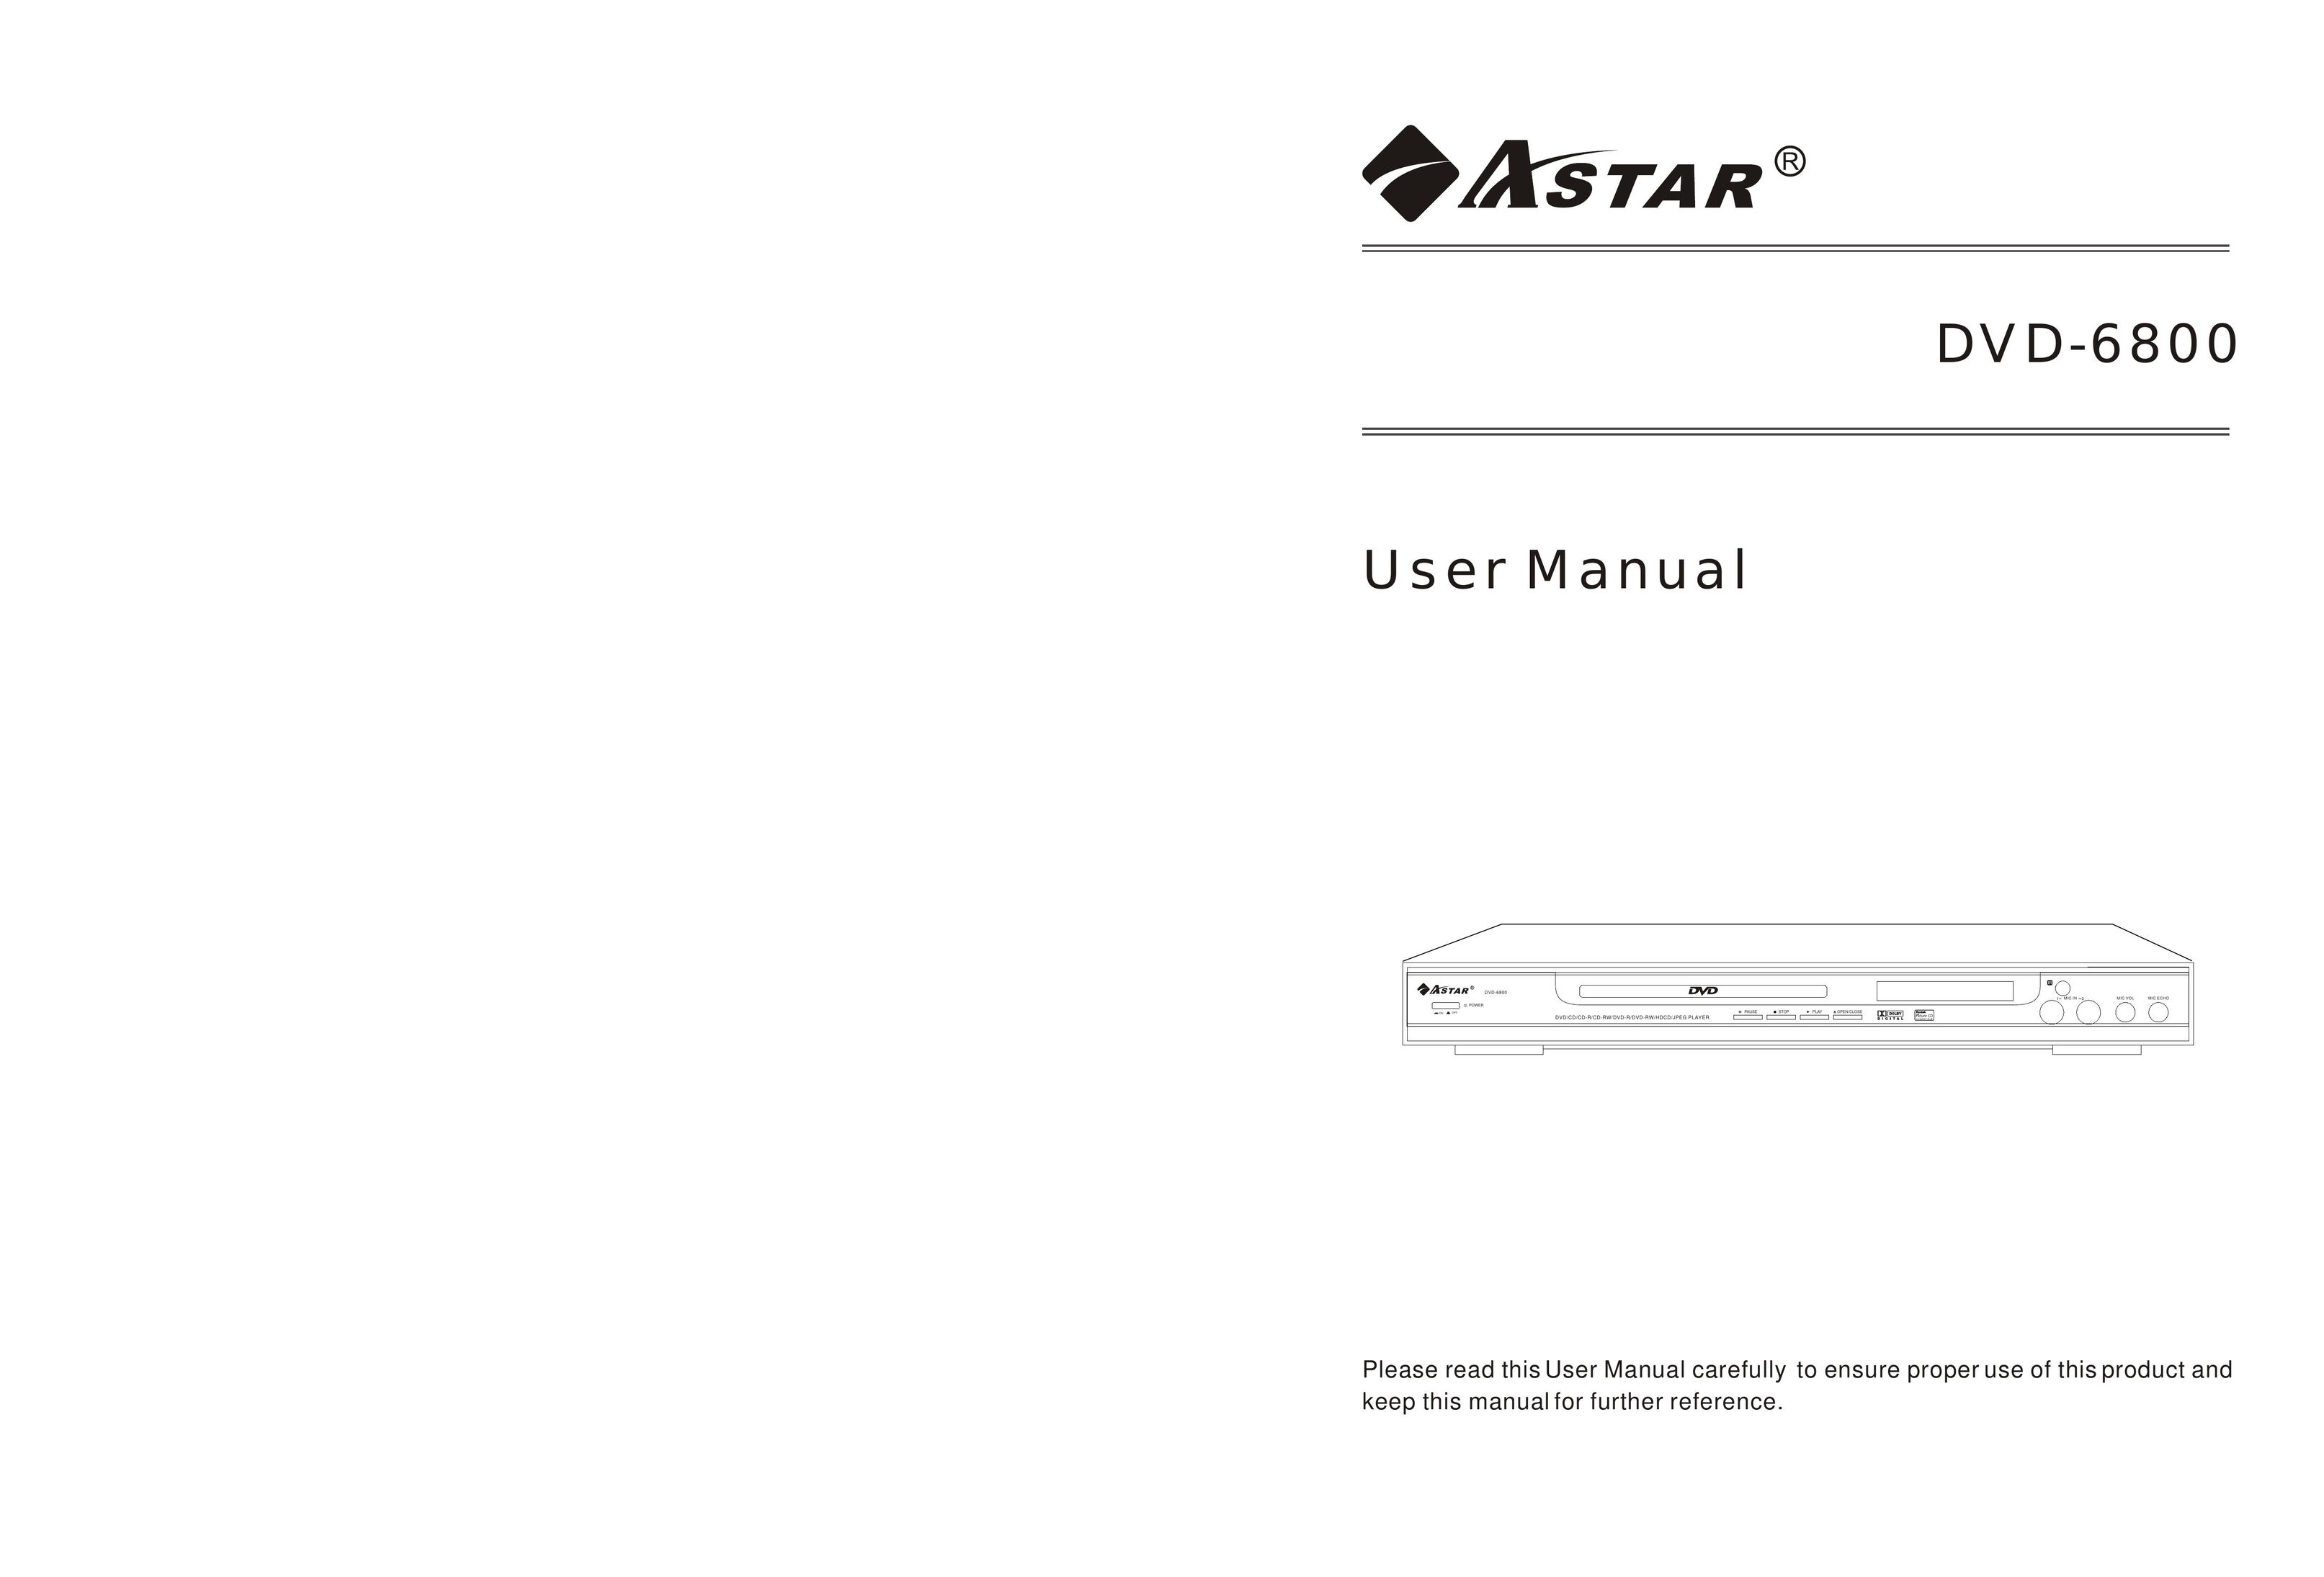 Astar electronic DVD-6800 DVD Player User Manual